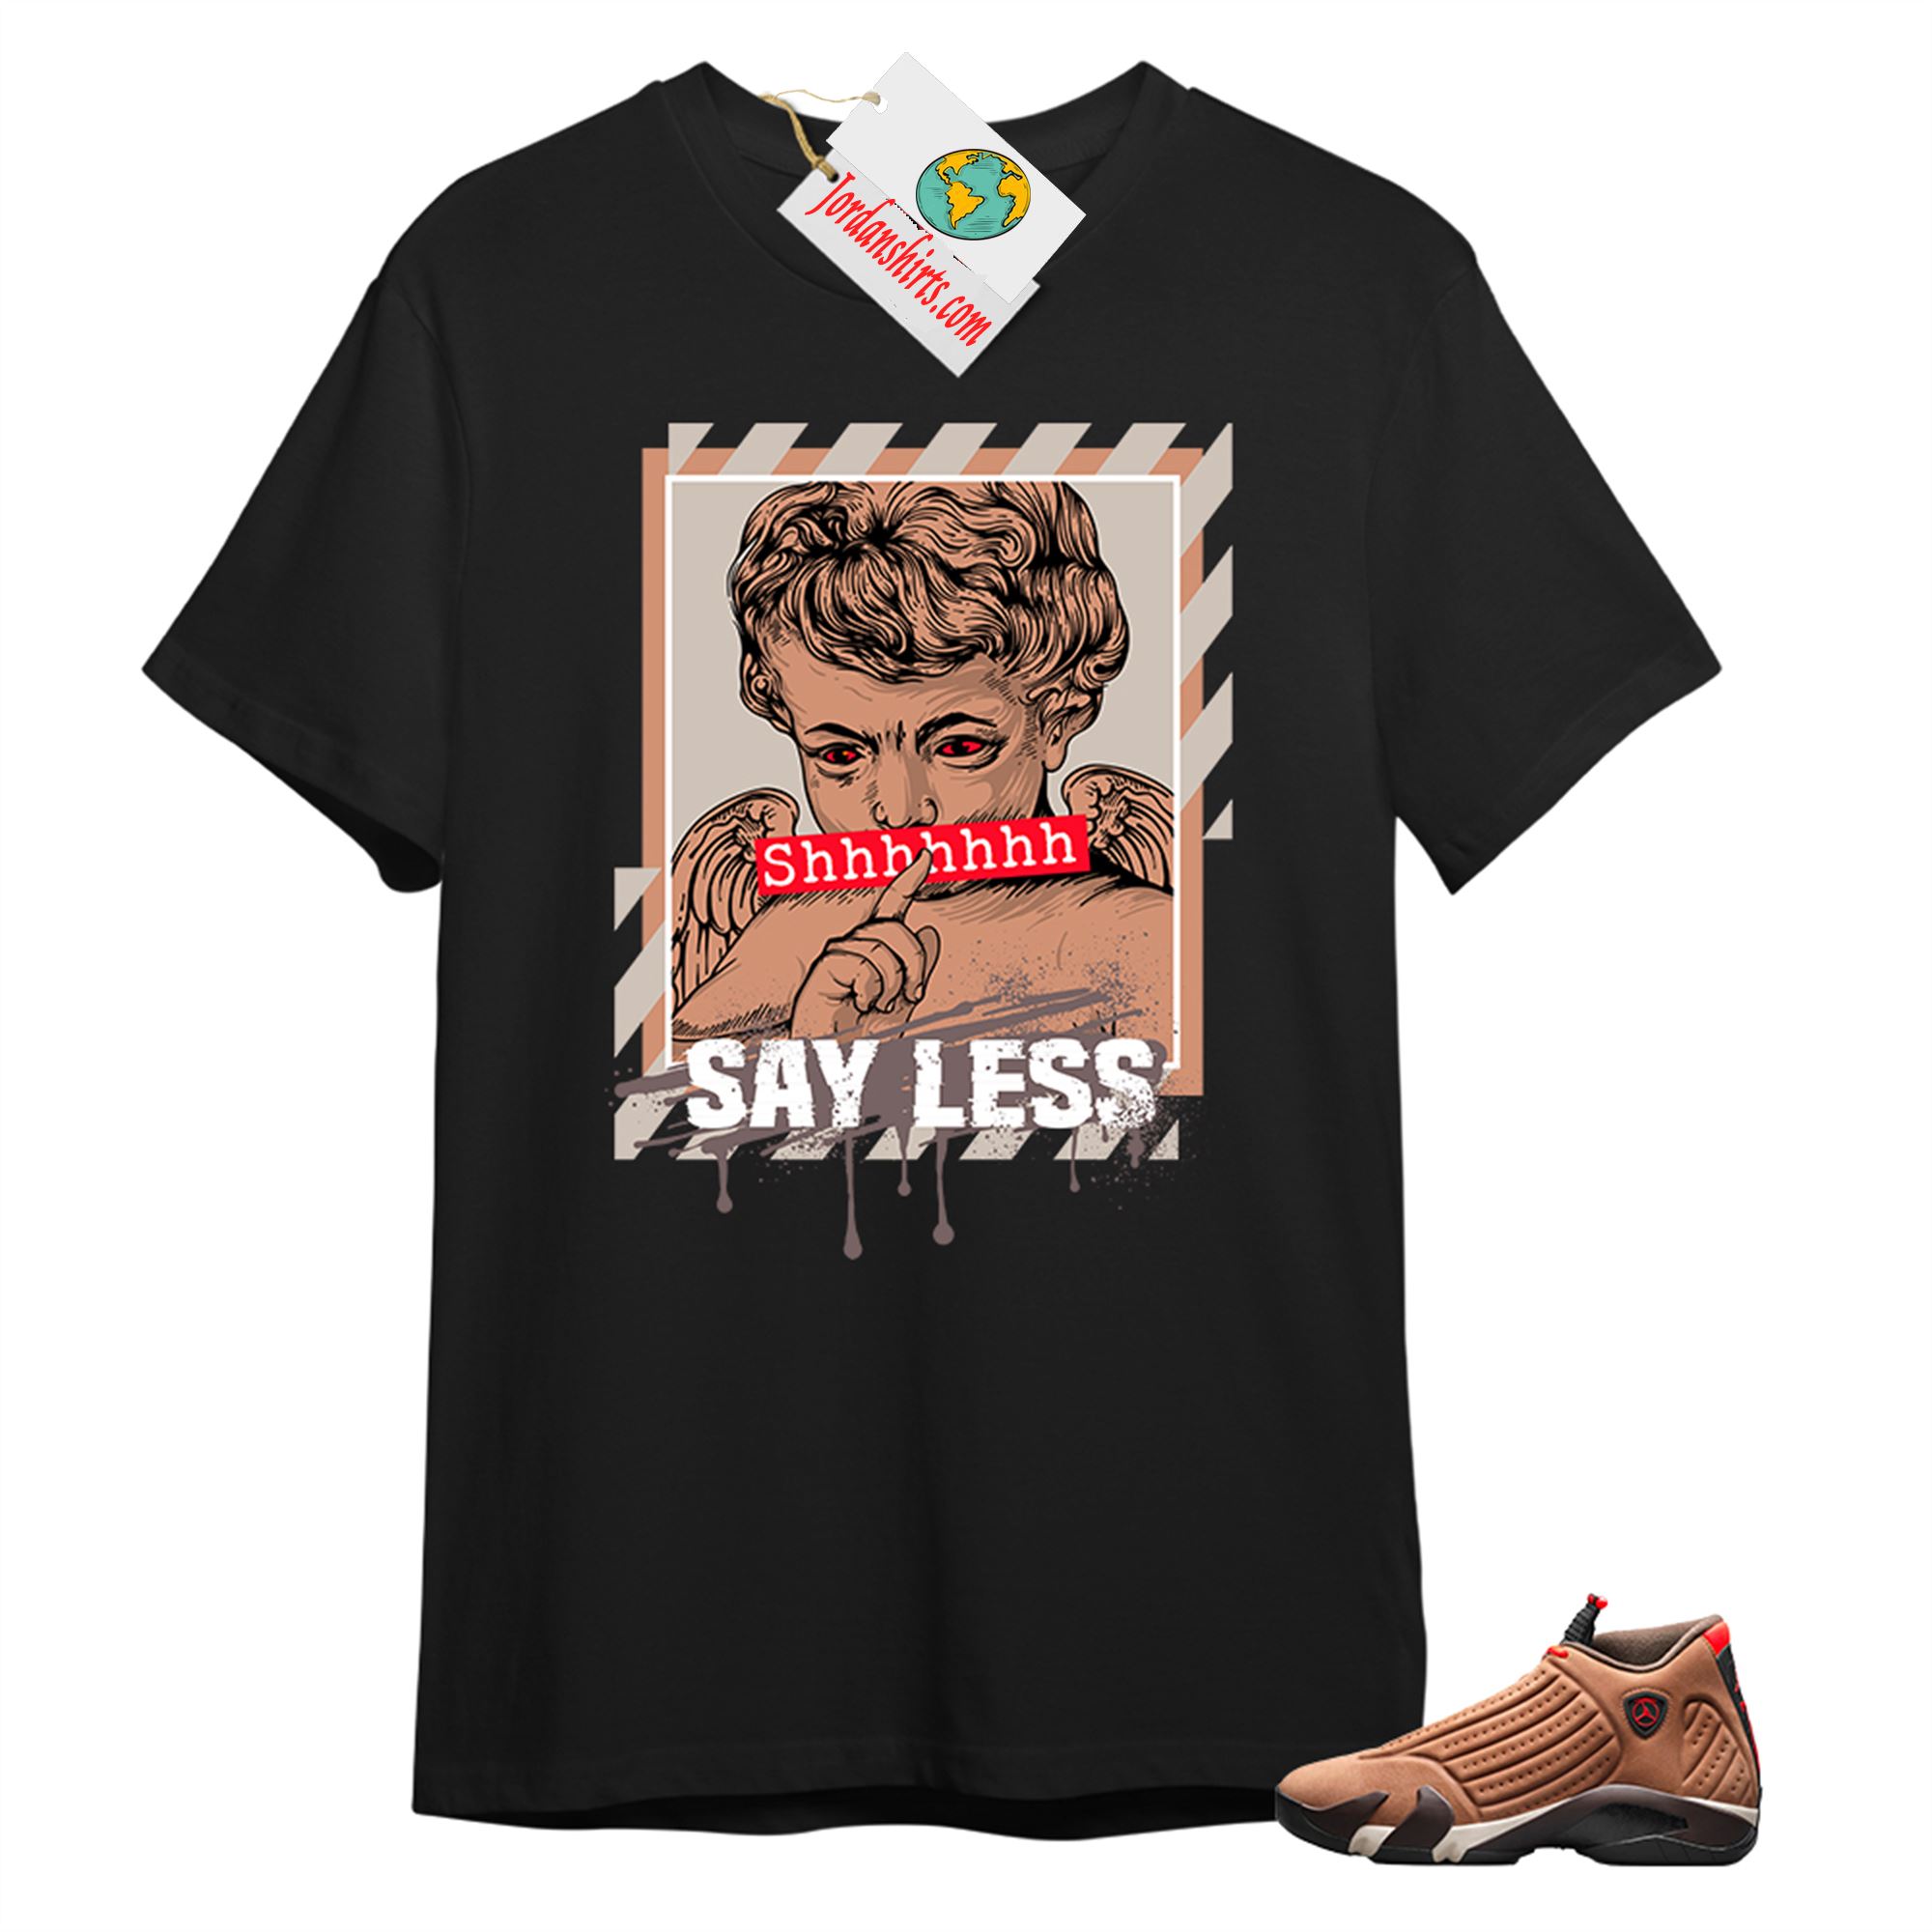 Jordan 14 Shirt, Say Less Angel Black T-shirt Air Jordan 14 Winterized 14s Full Size Up To 5xl